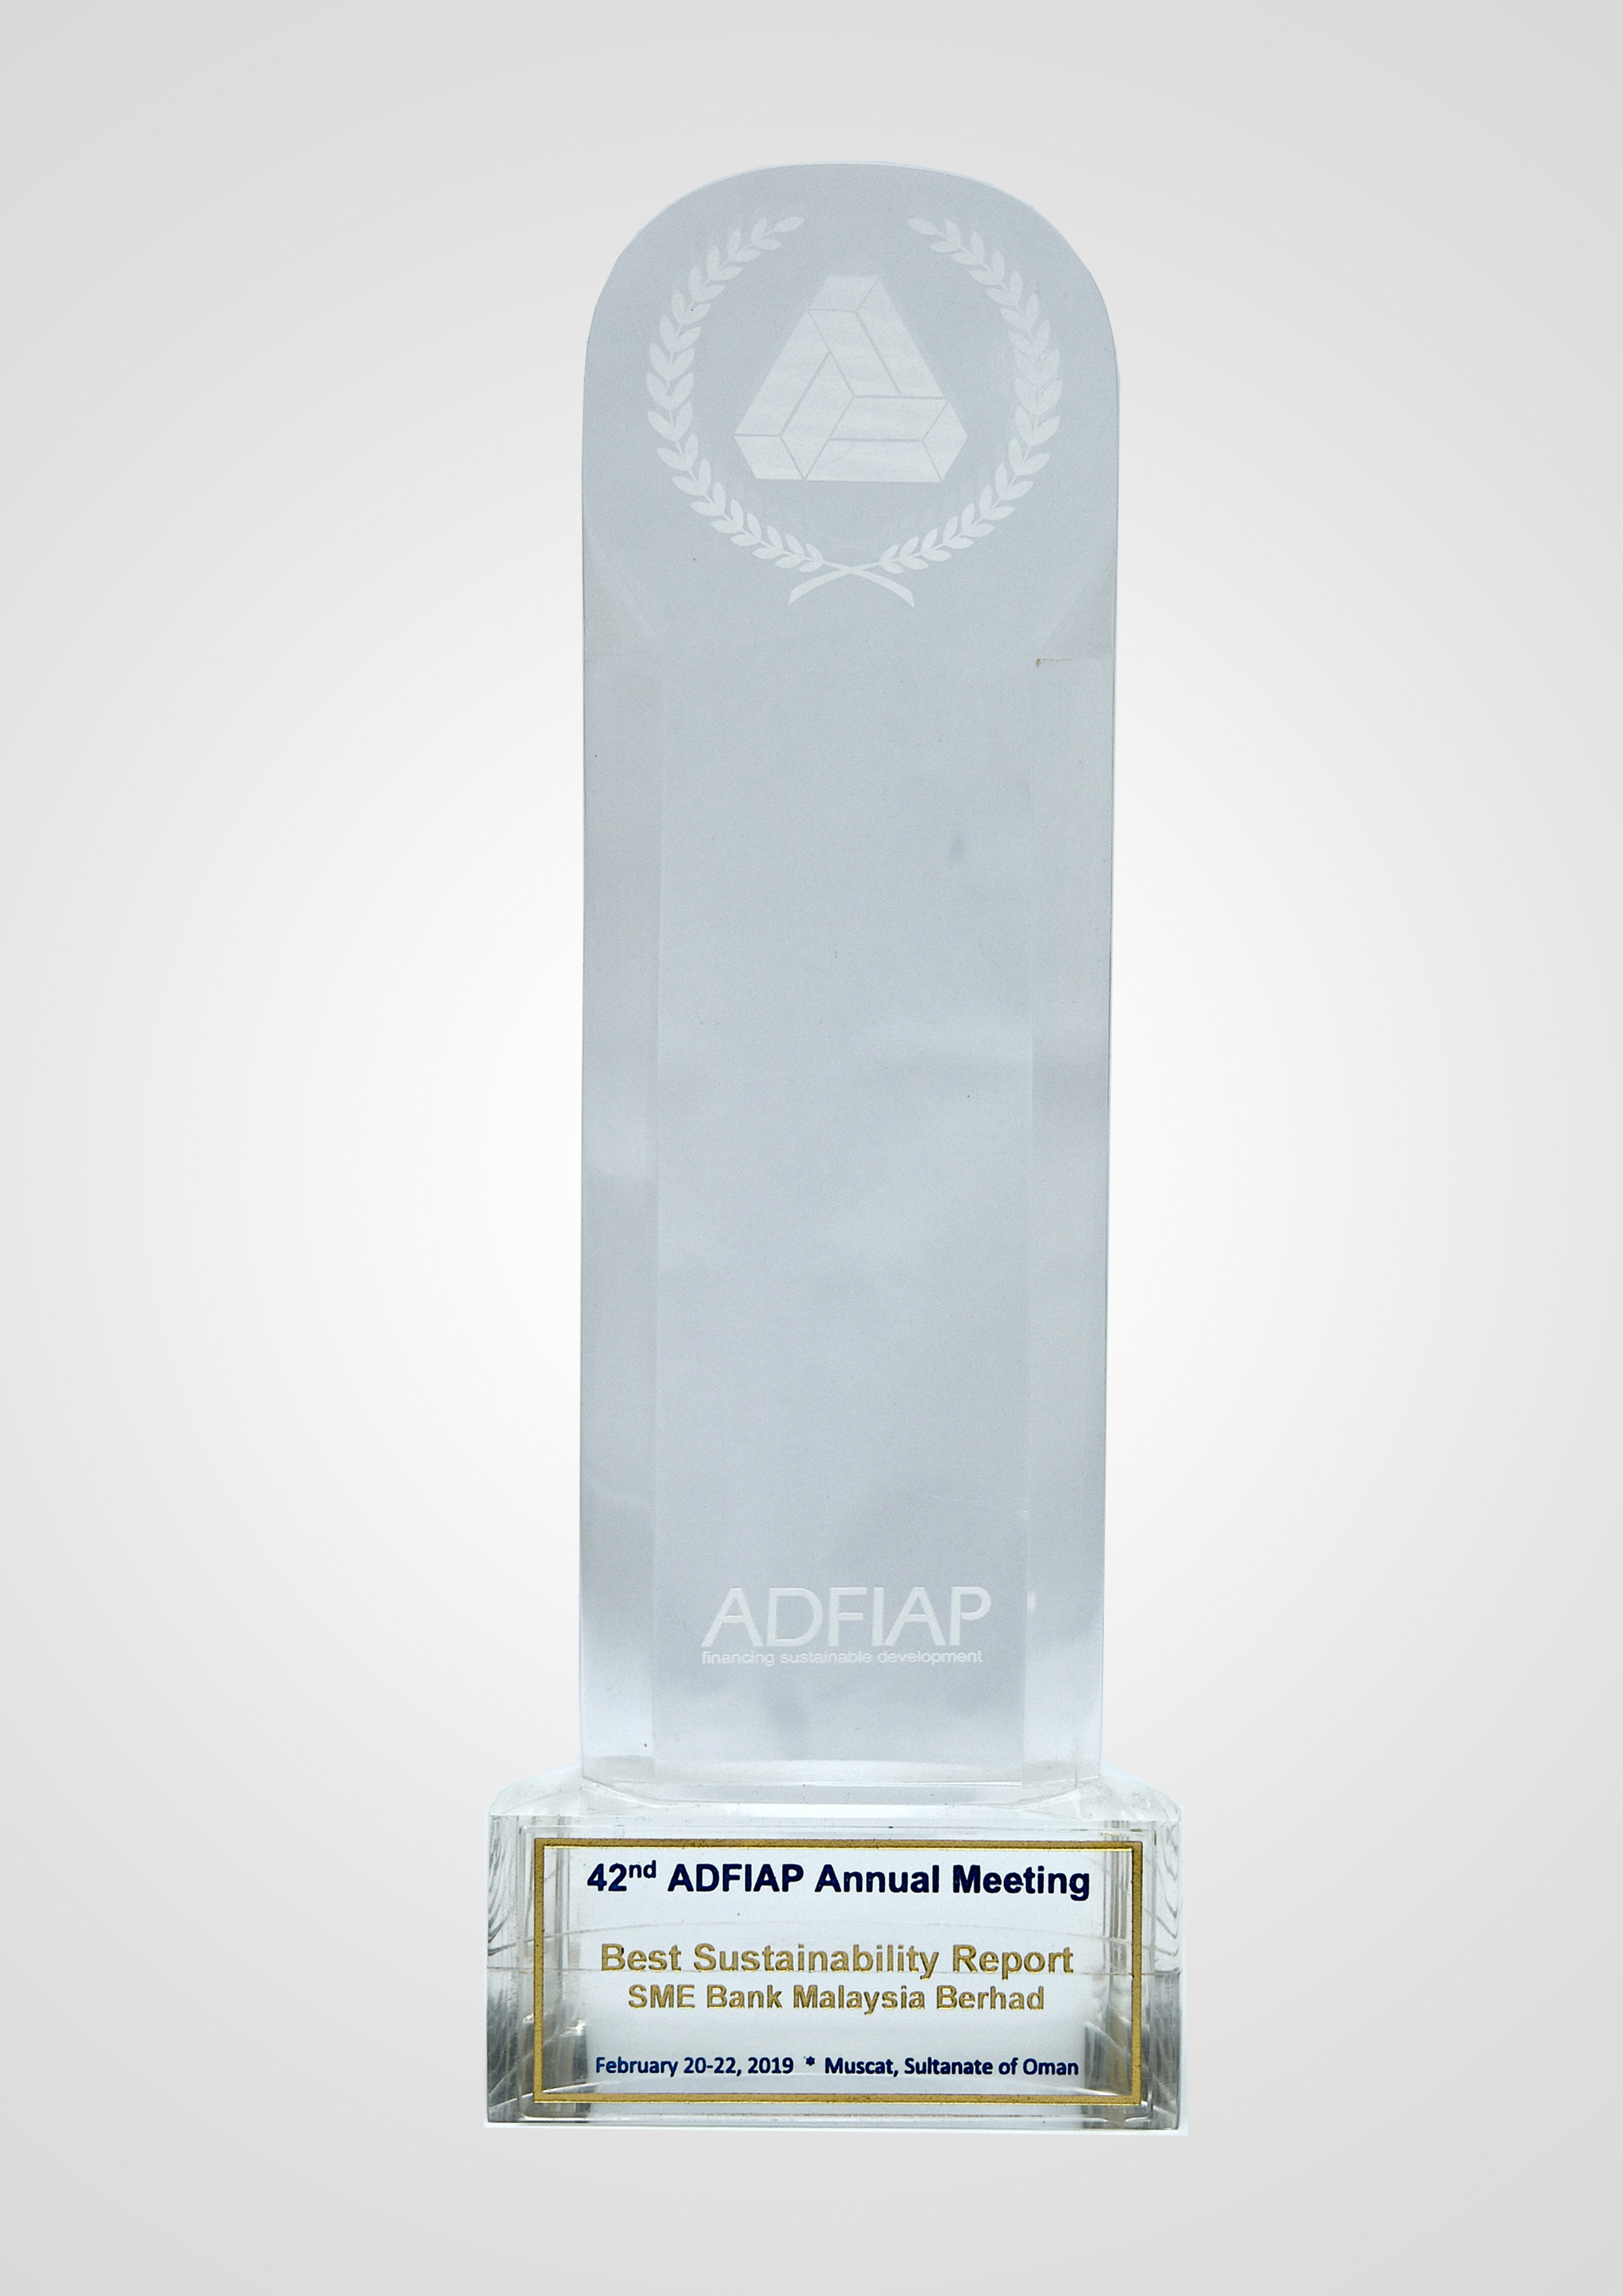 ADFIAP Awards 2019 - Best Sustainability Report